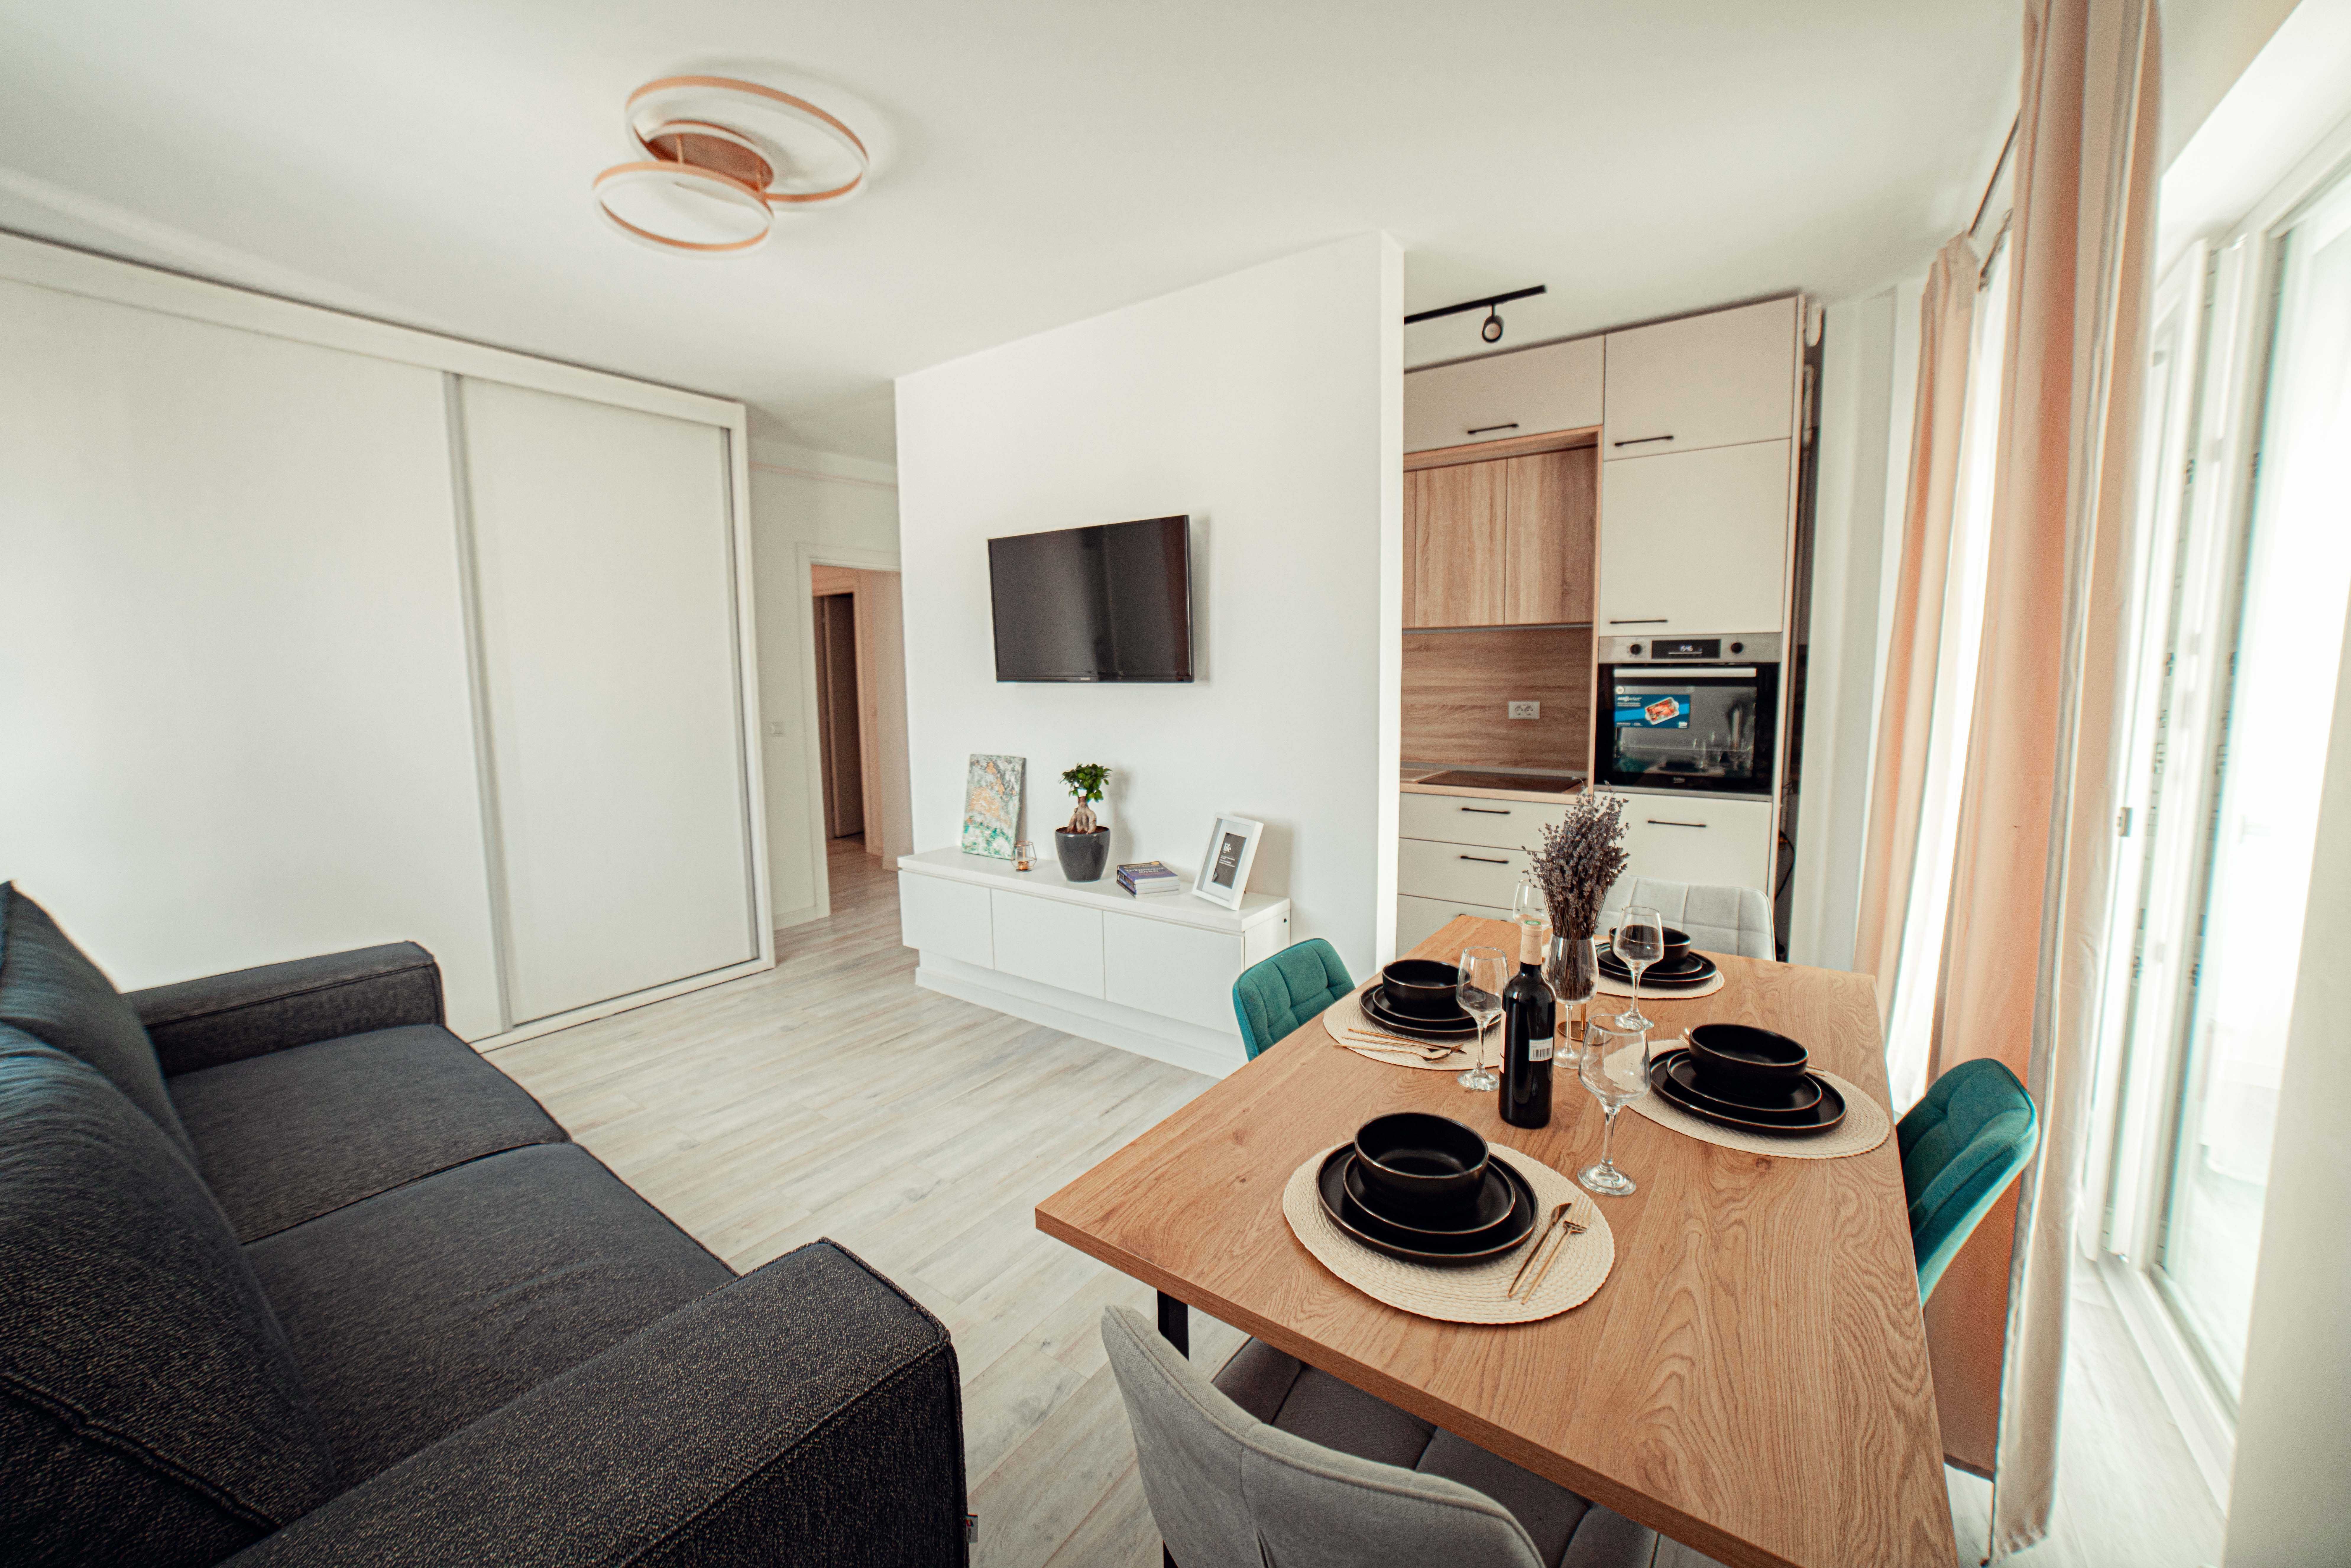 Cazare in Apartamente - Regim Hotelier - Palas/Newton/Copou